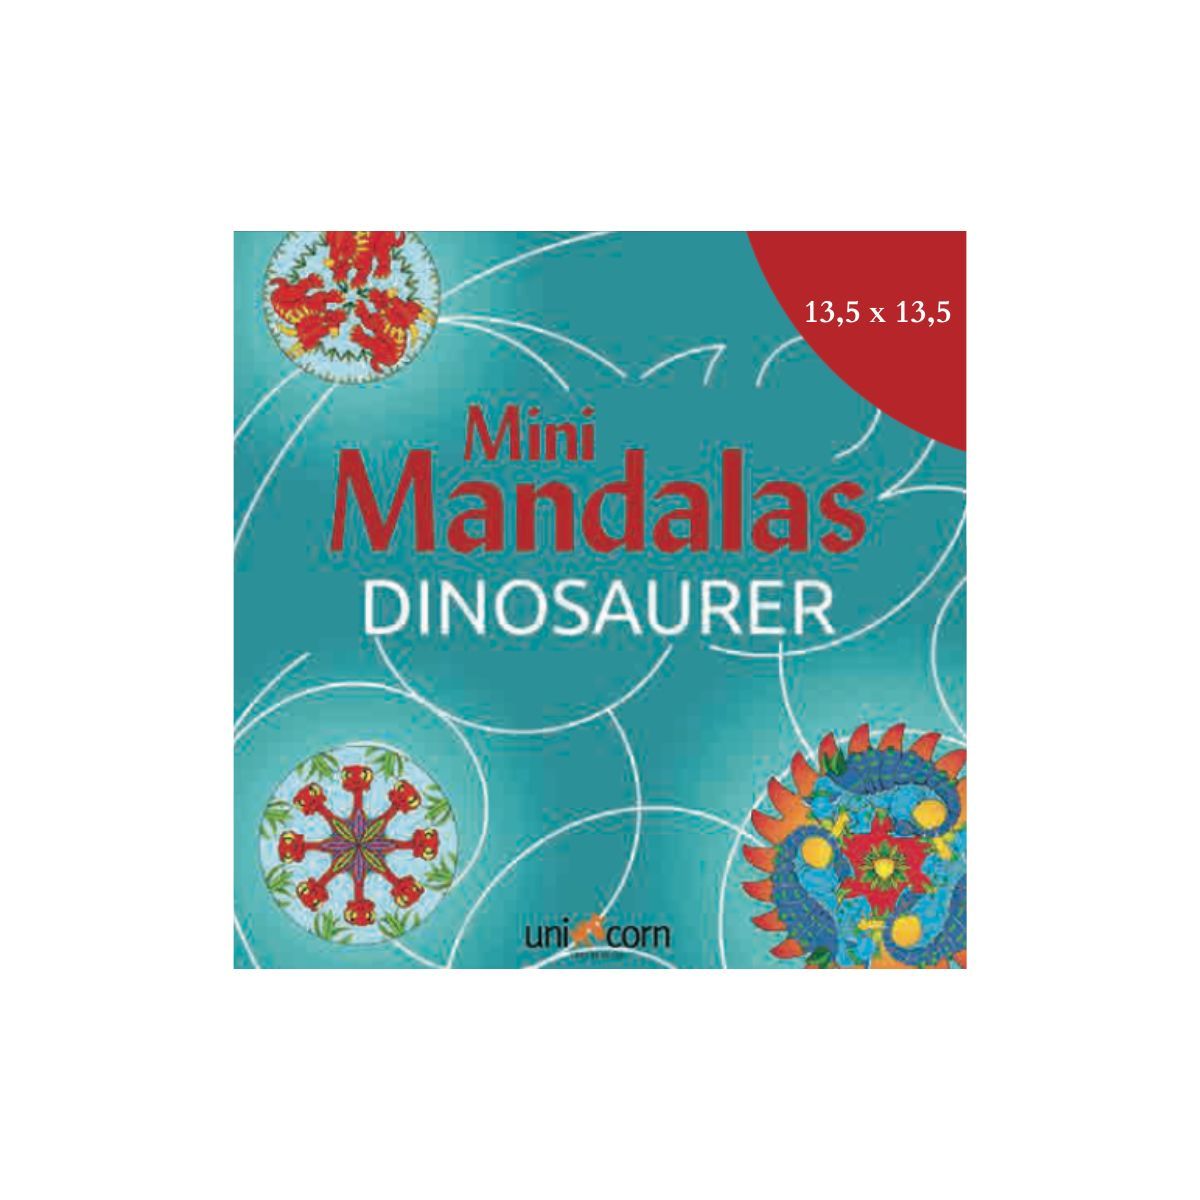 Mini Mandalas med dinosaurer i de kendte cirkulære mønstrer